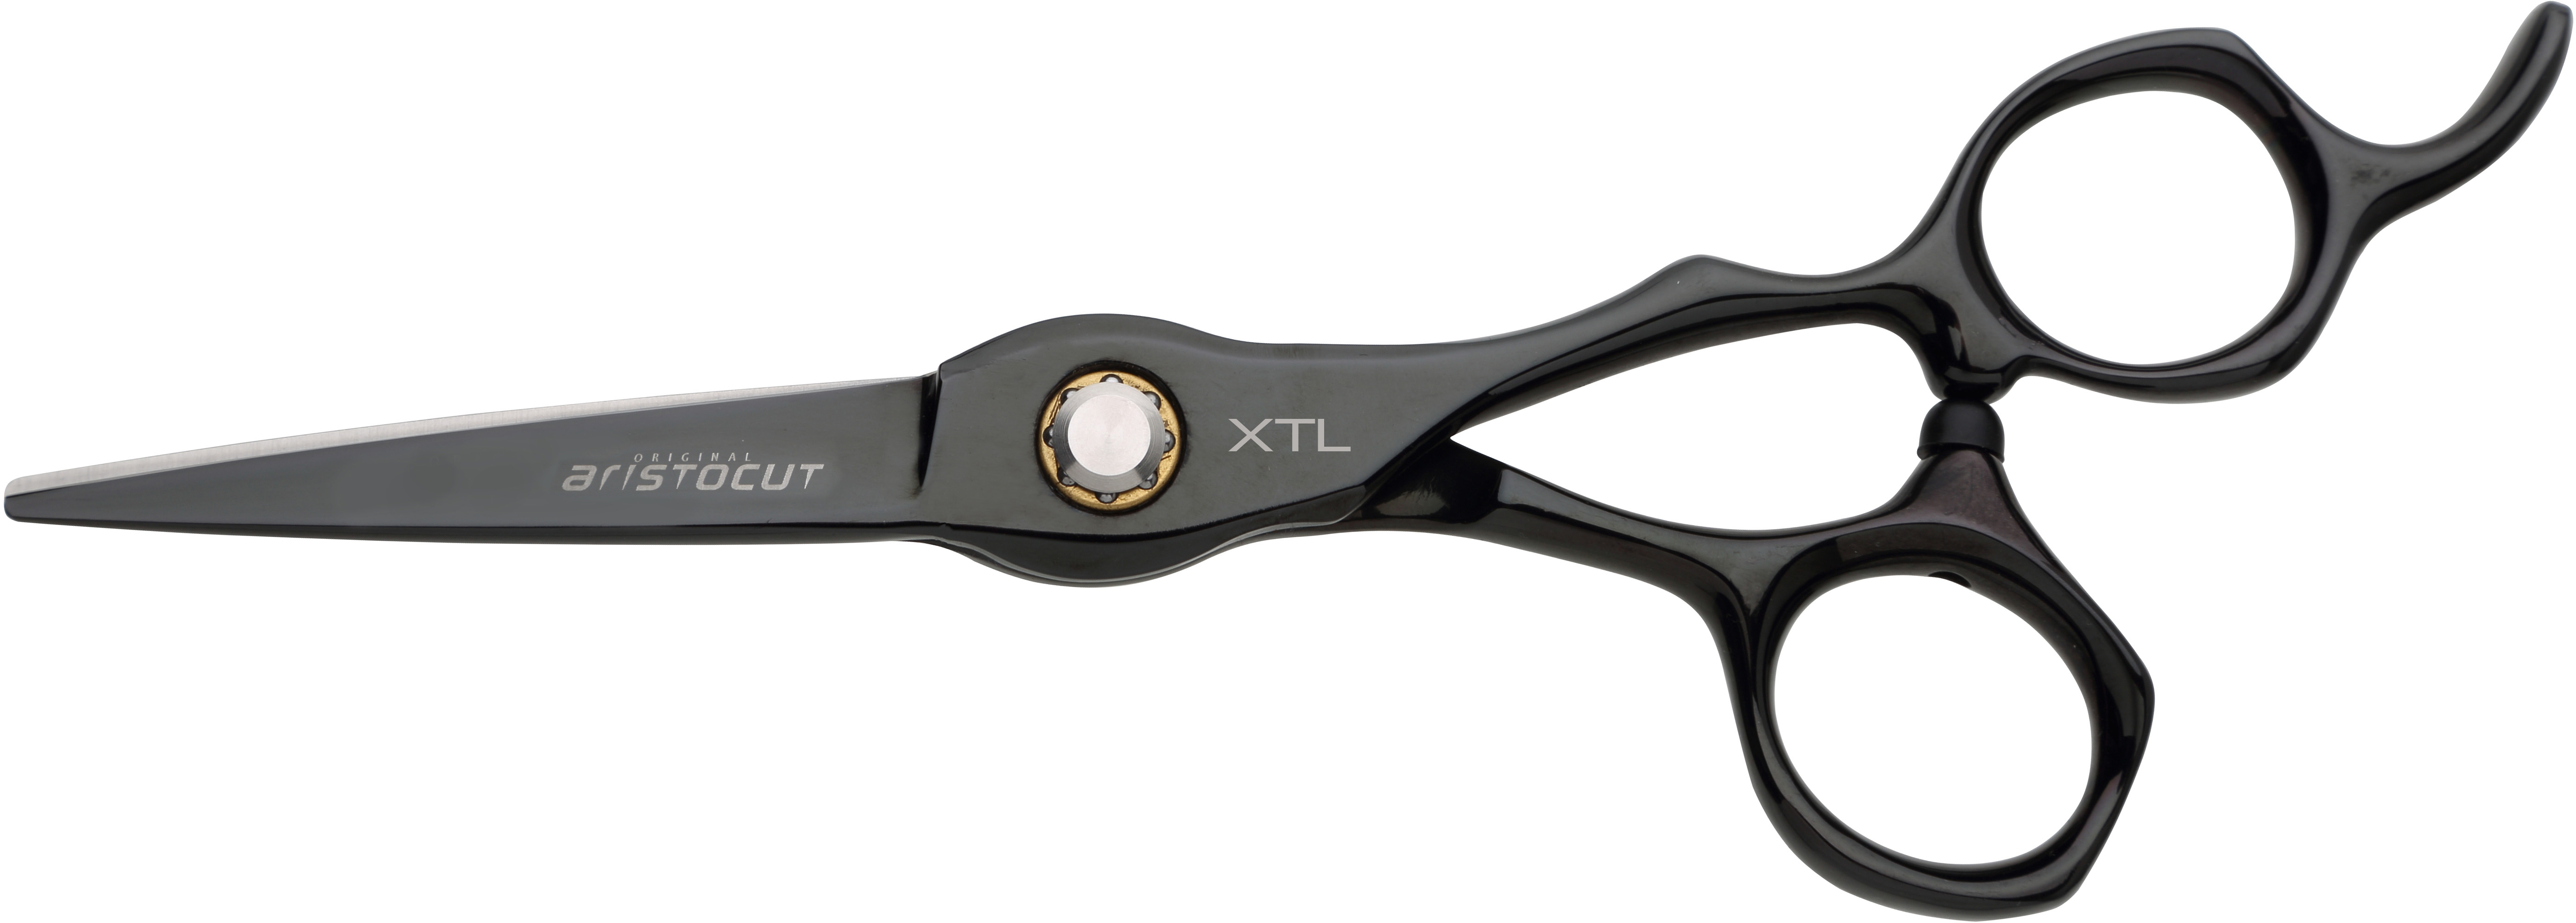 XTL Hair cutting scissors